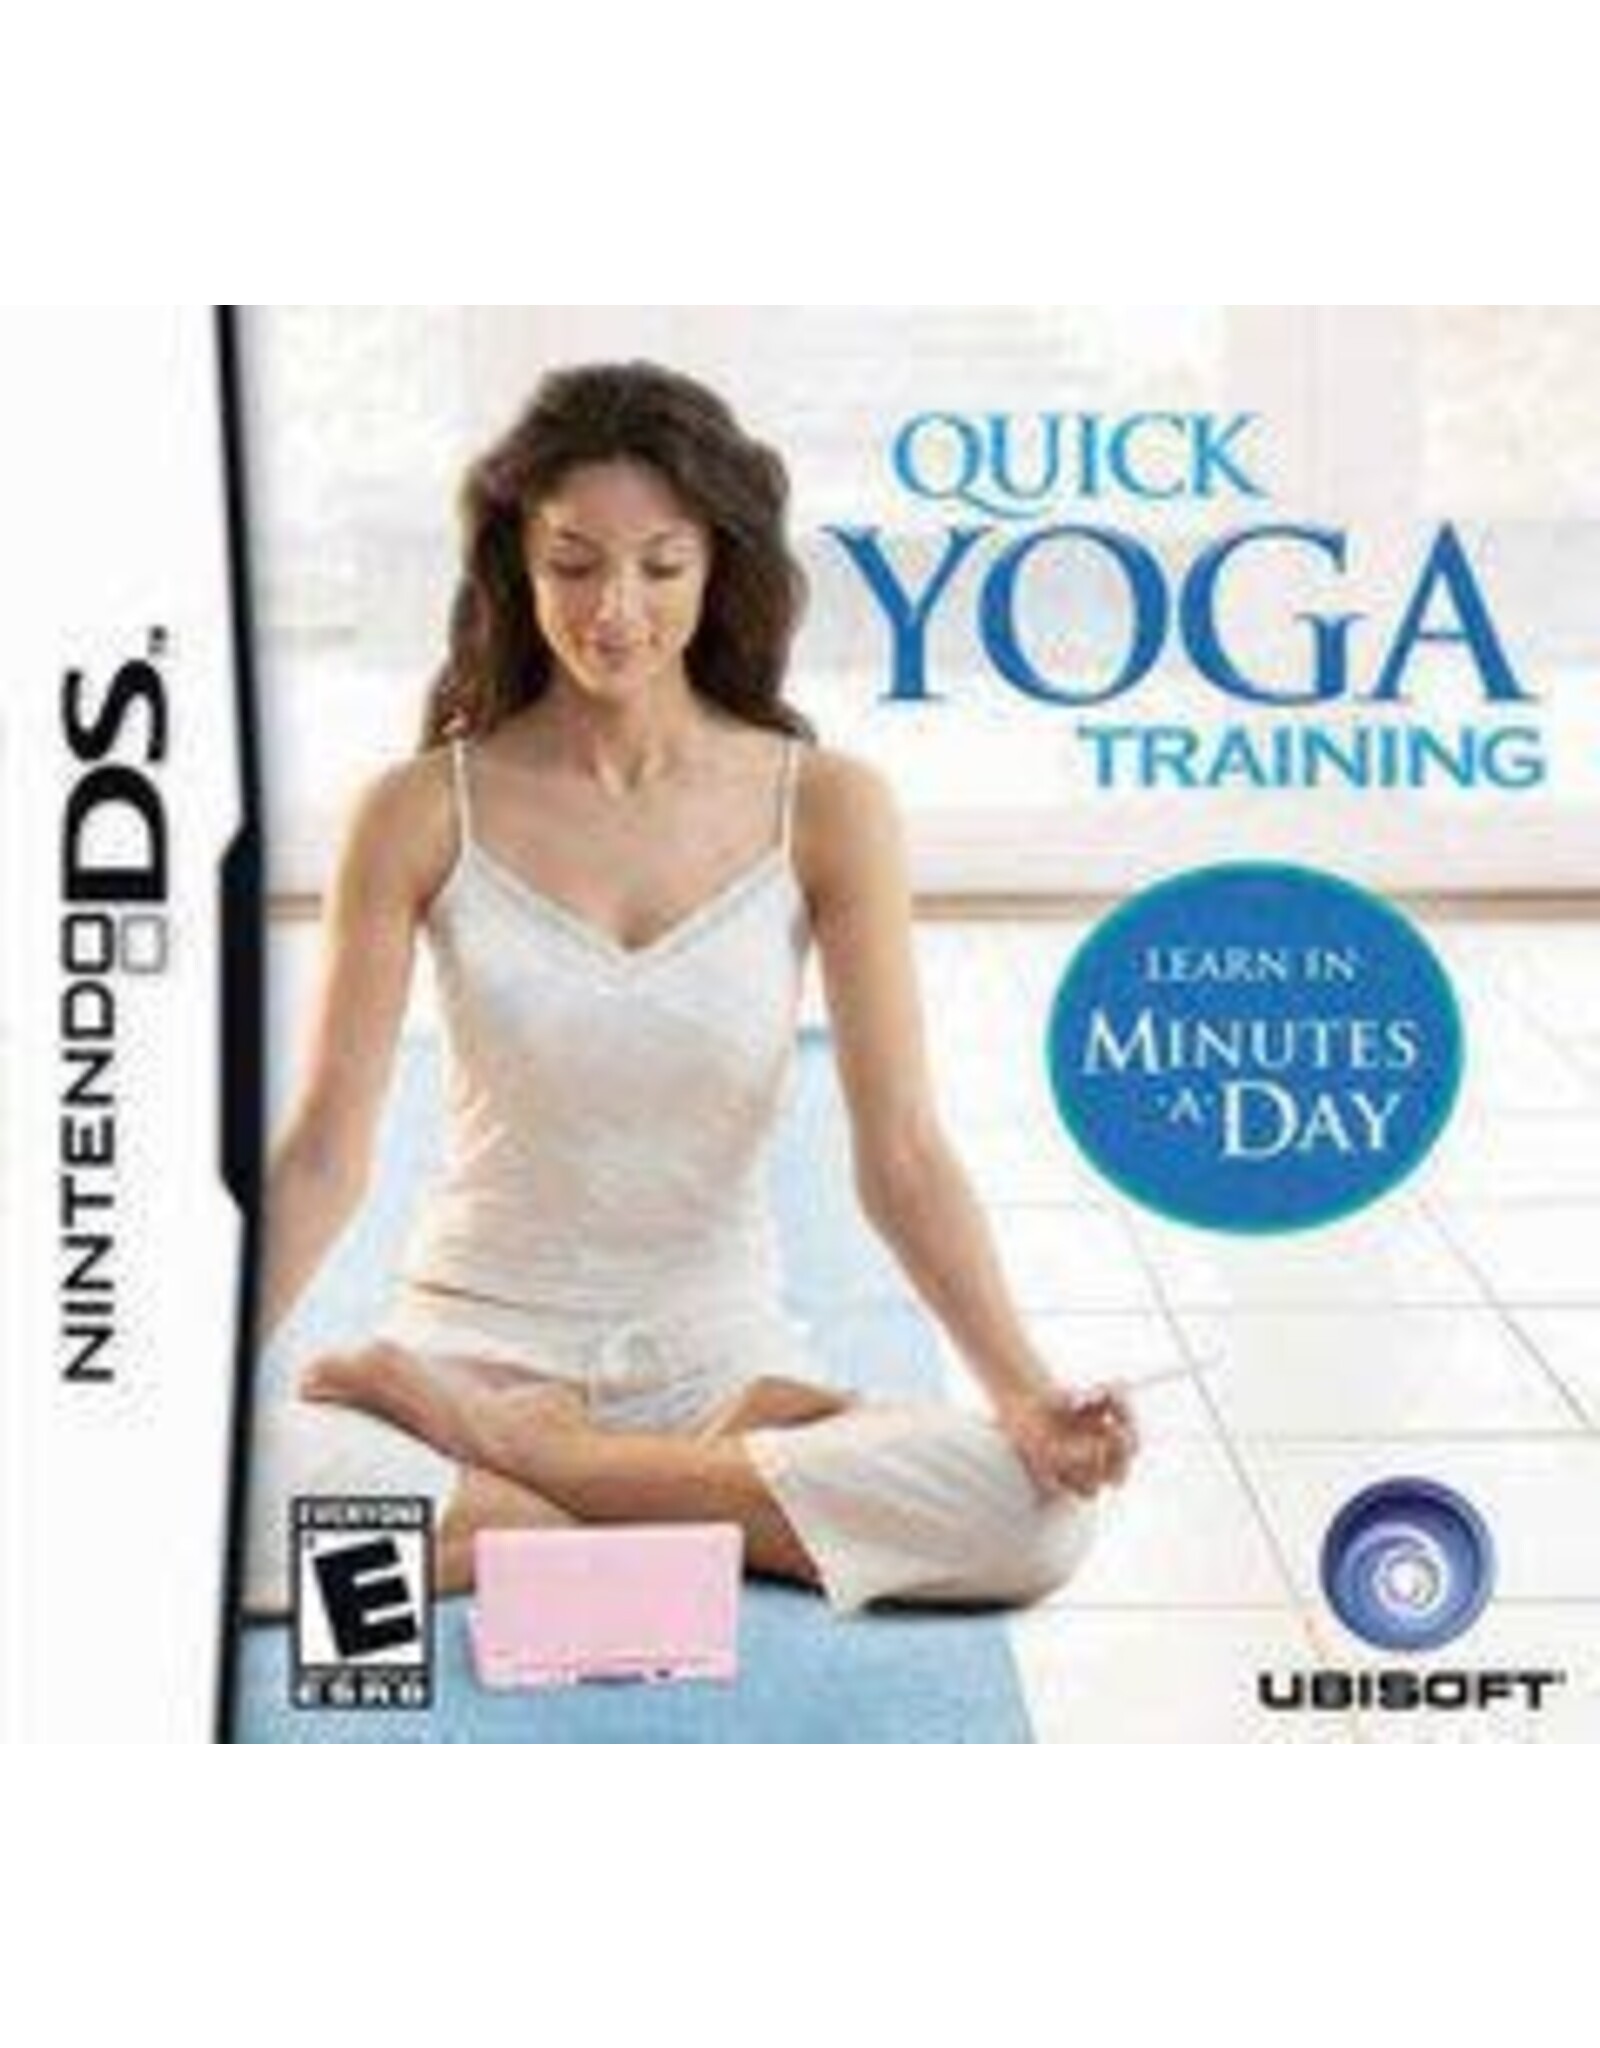 Nintendo DS Quick Yoga Training (CiB)